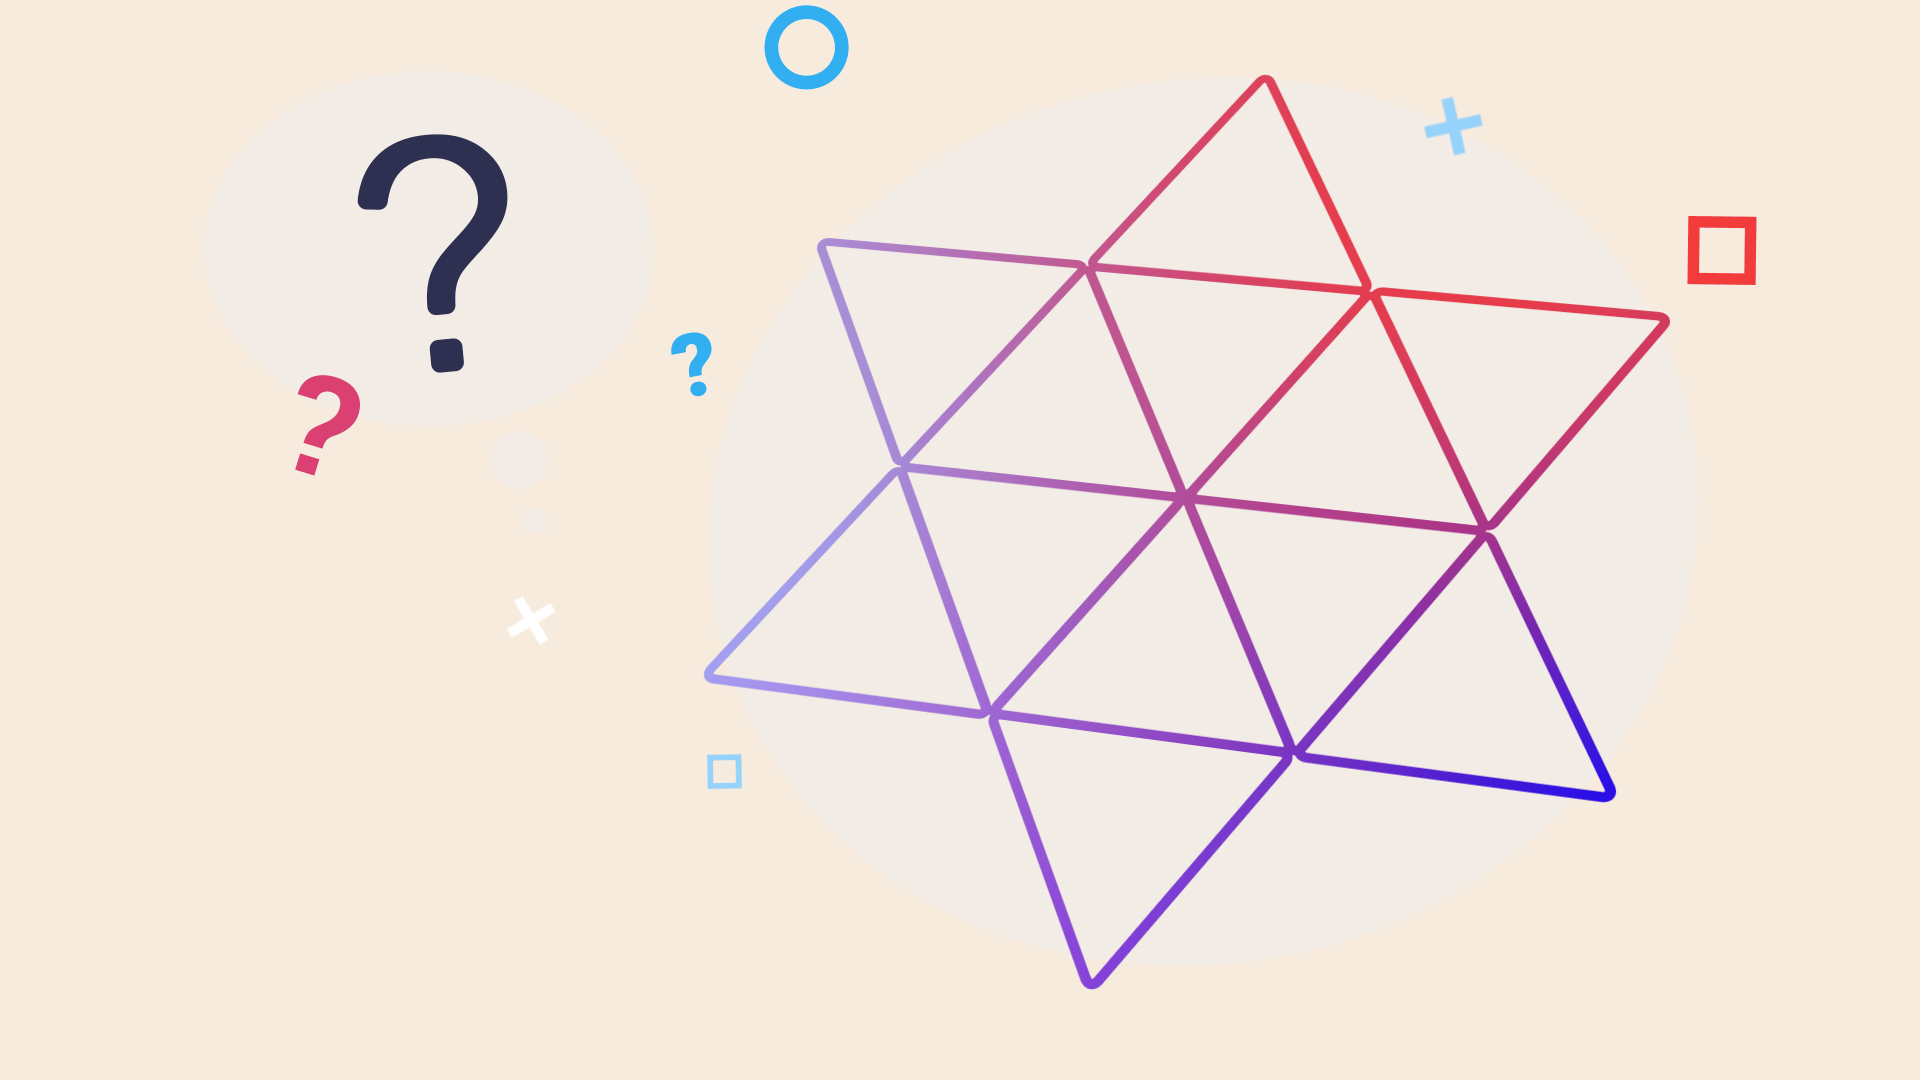 Logik-Rätsel: Aufgabe aus IQ-Test – wie viele Dreiecke sehen Sie?